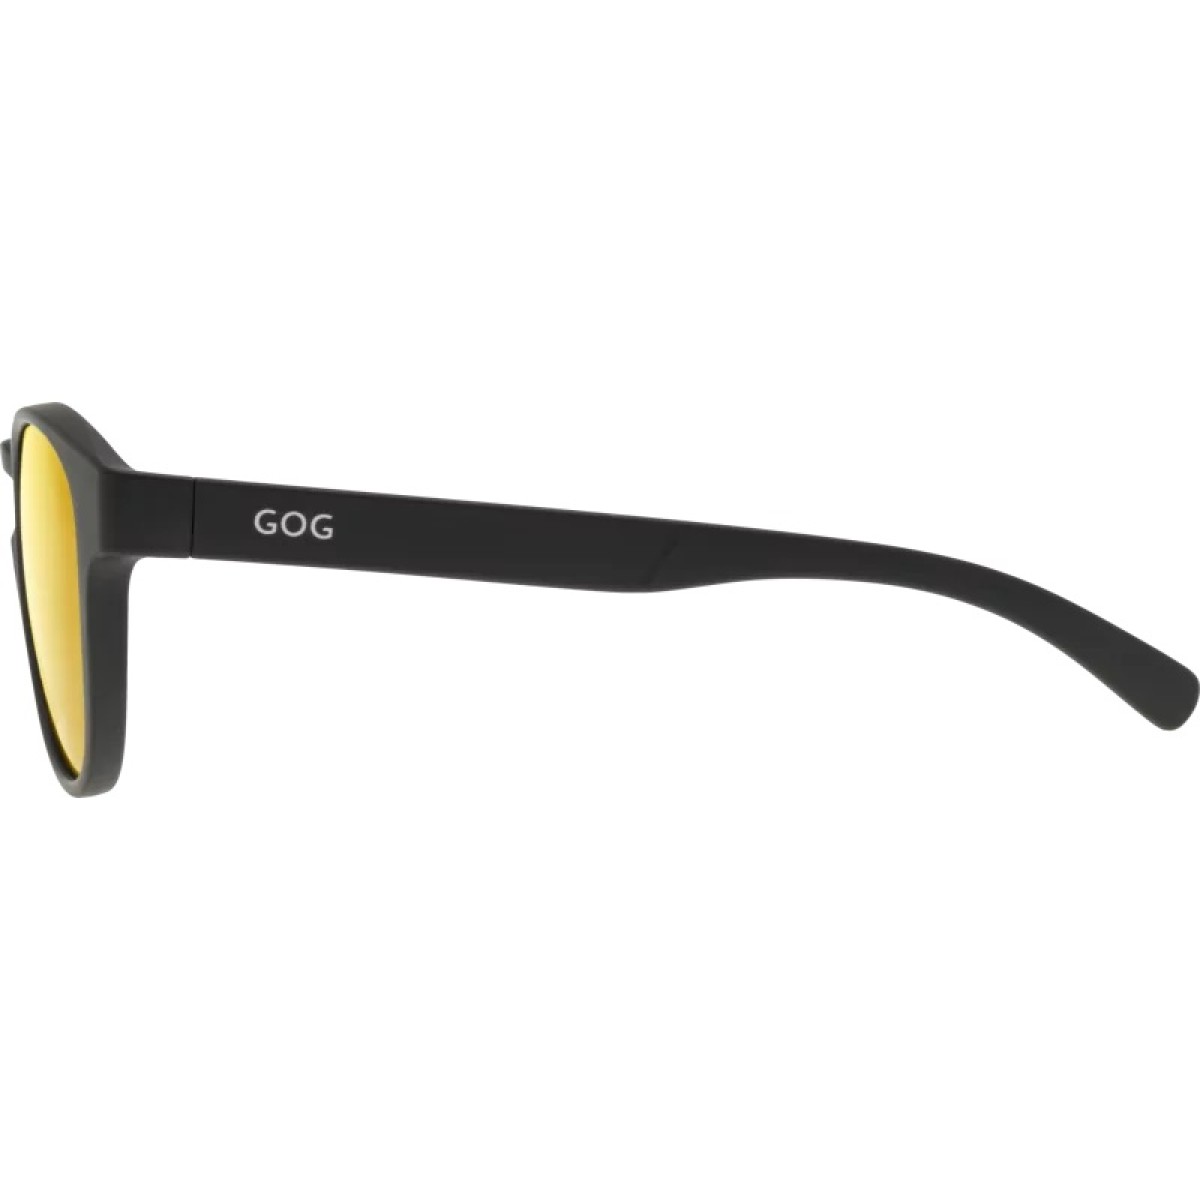 Sunglasses Polarized E705-2P GOG - view 3